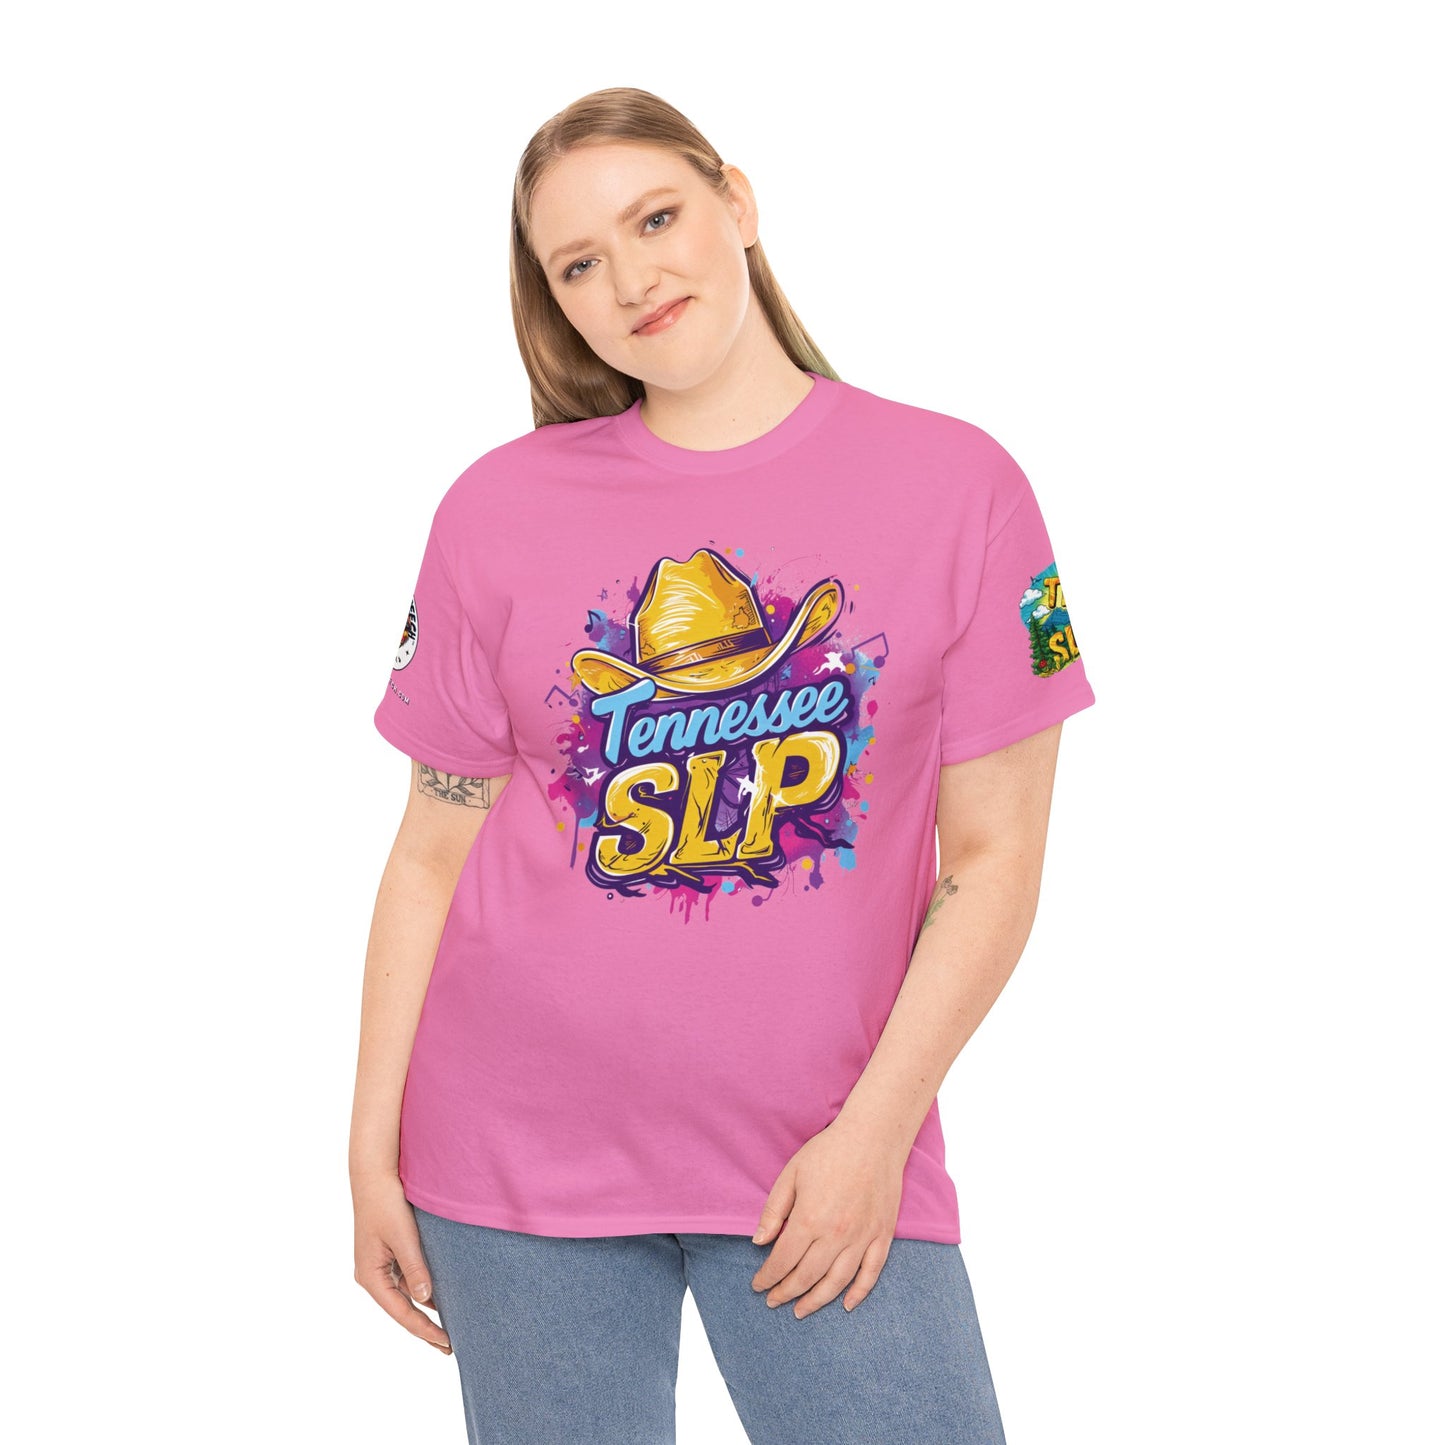 Tennessee SLP #2 Speech Therapy Shirt